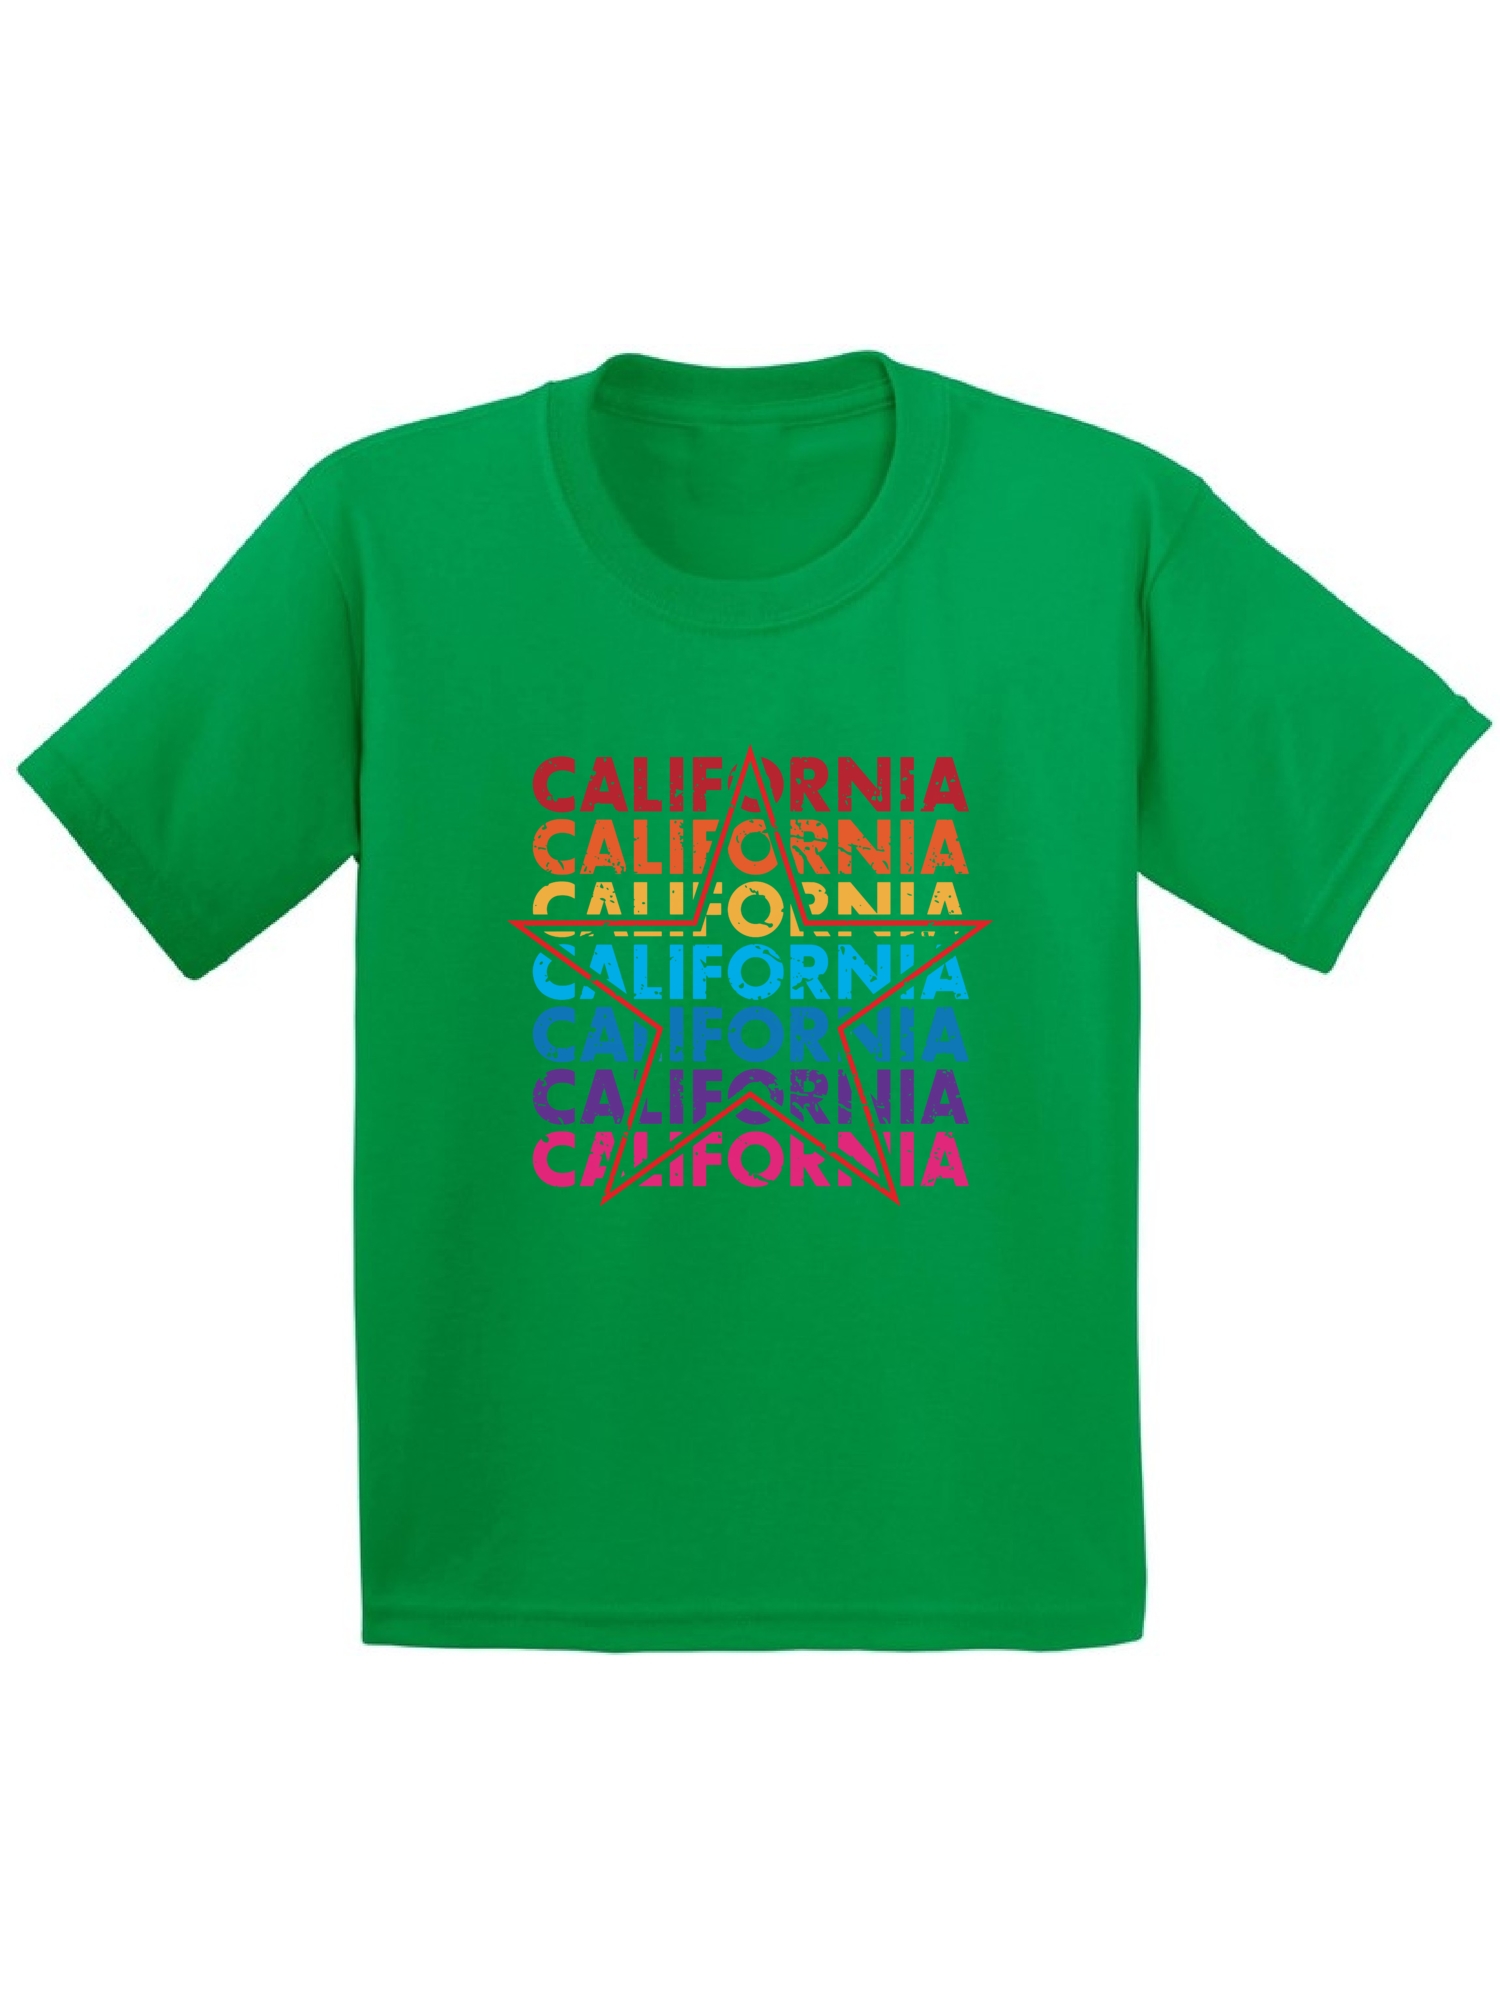 Awkward Styles California Star Youth Shirt San Francisco California State T shirt for Boys I Love California California State T shirt for Girls Kids Gifts California Lover Kids Tshirt - image 1 of 4